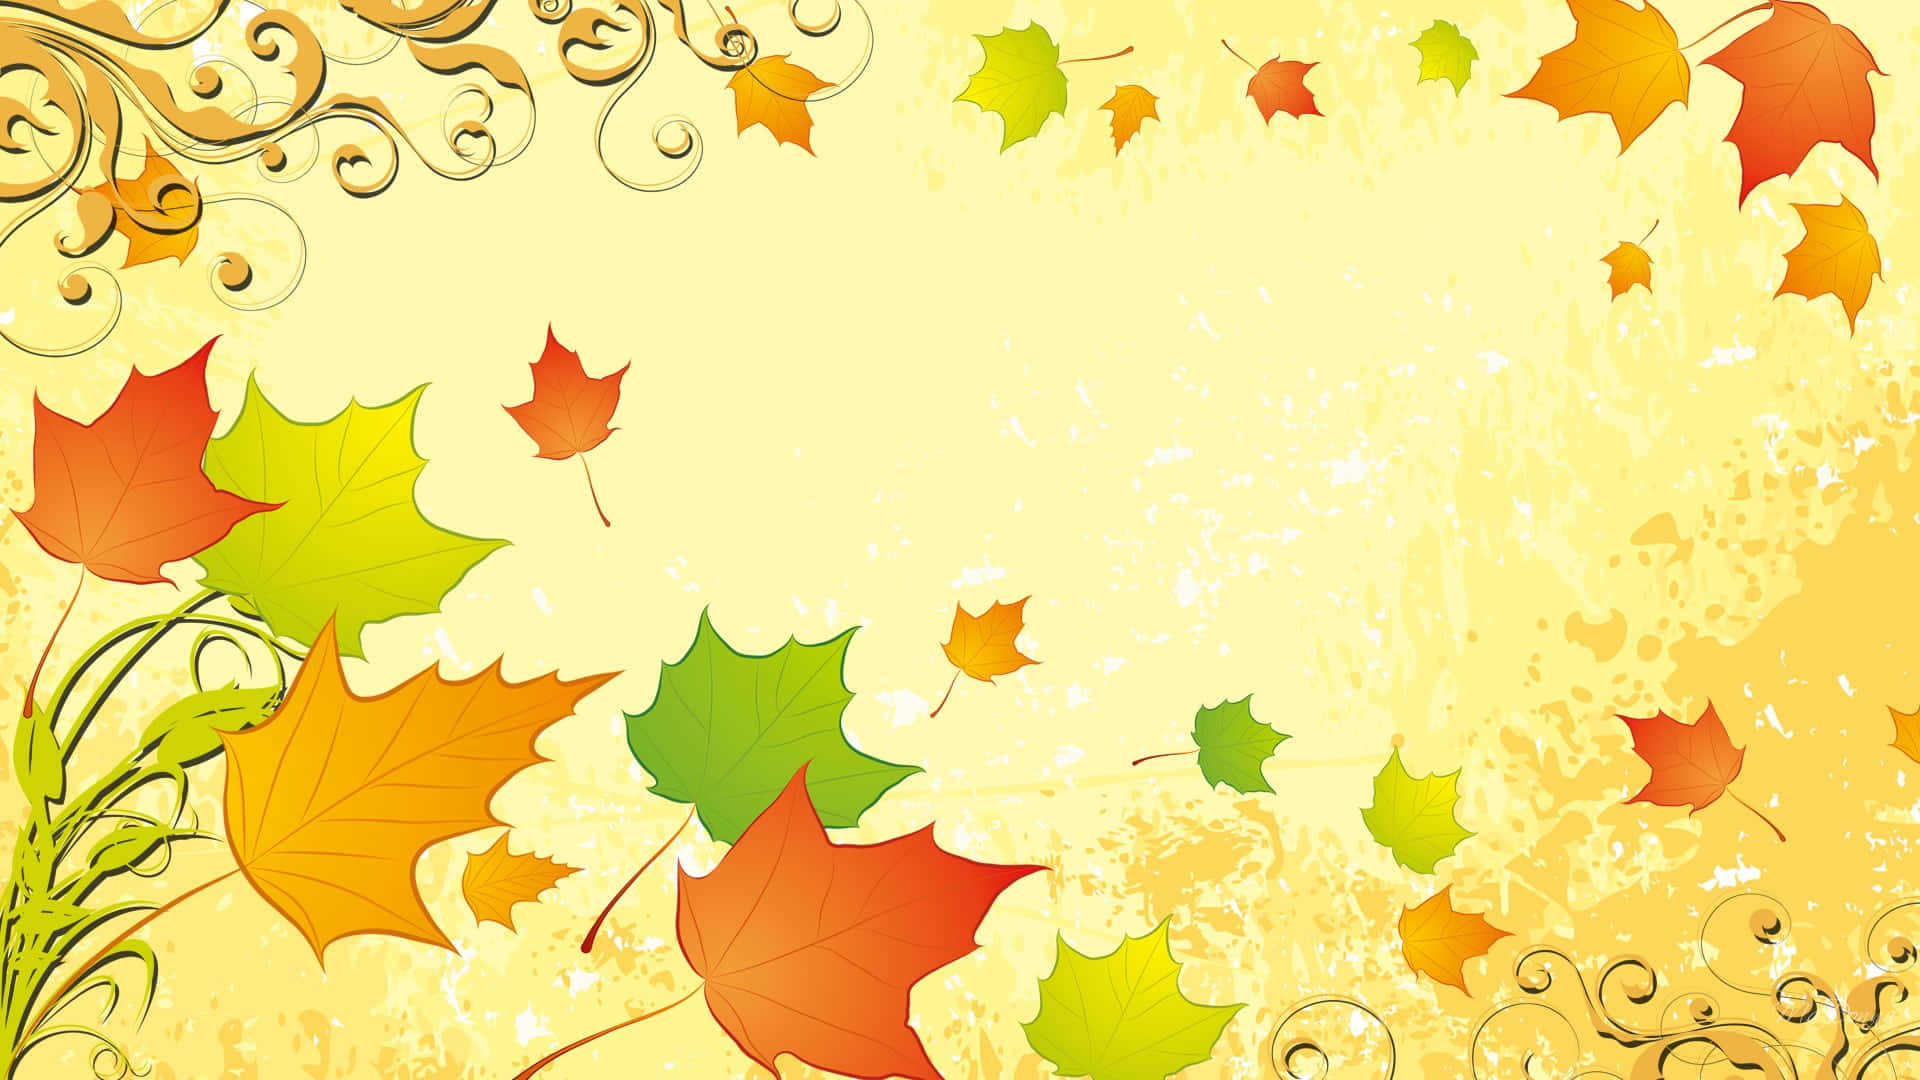 Take a stroll through the beautiful autumn landscape Wallpaper